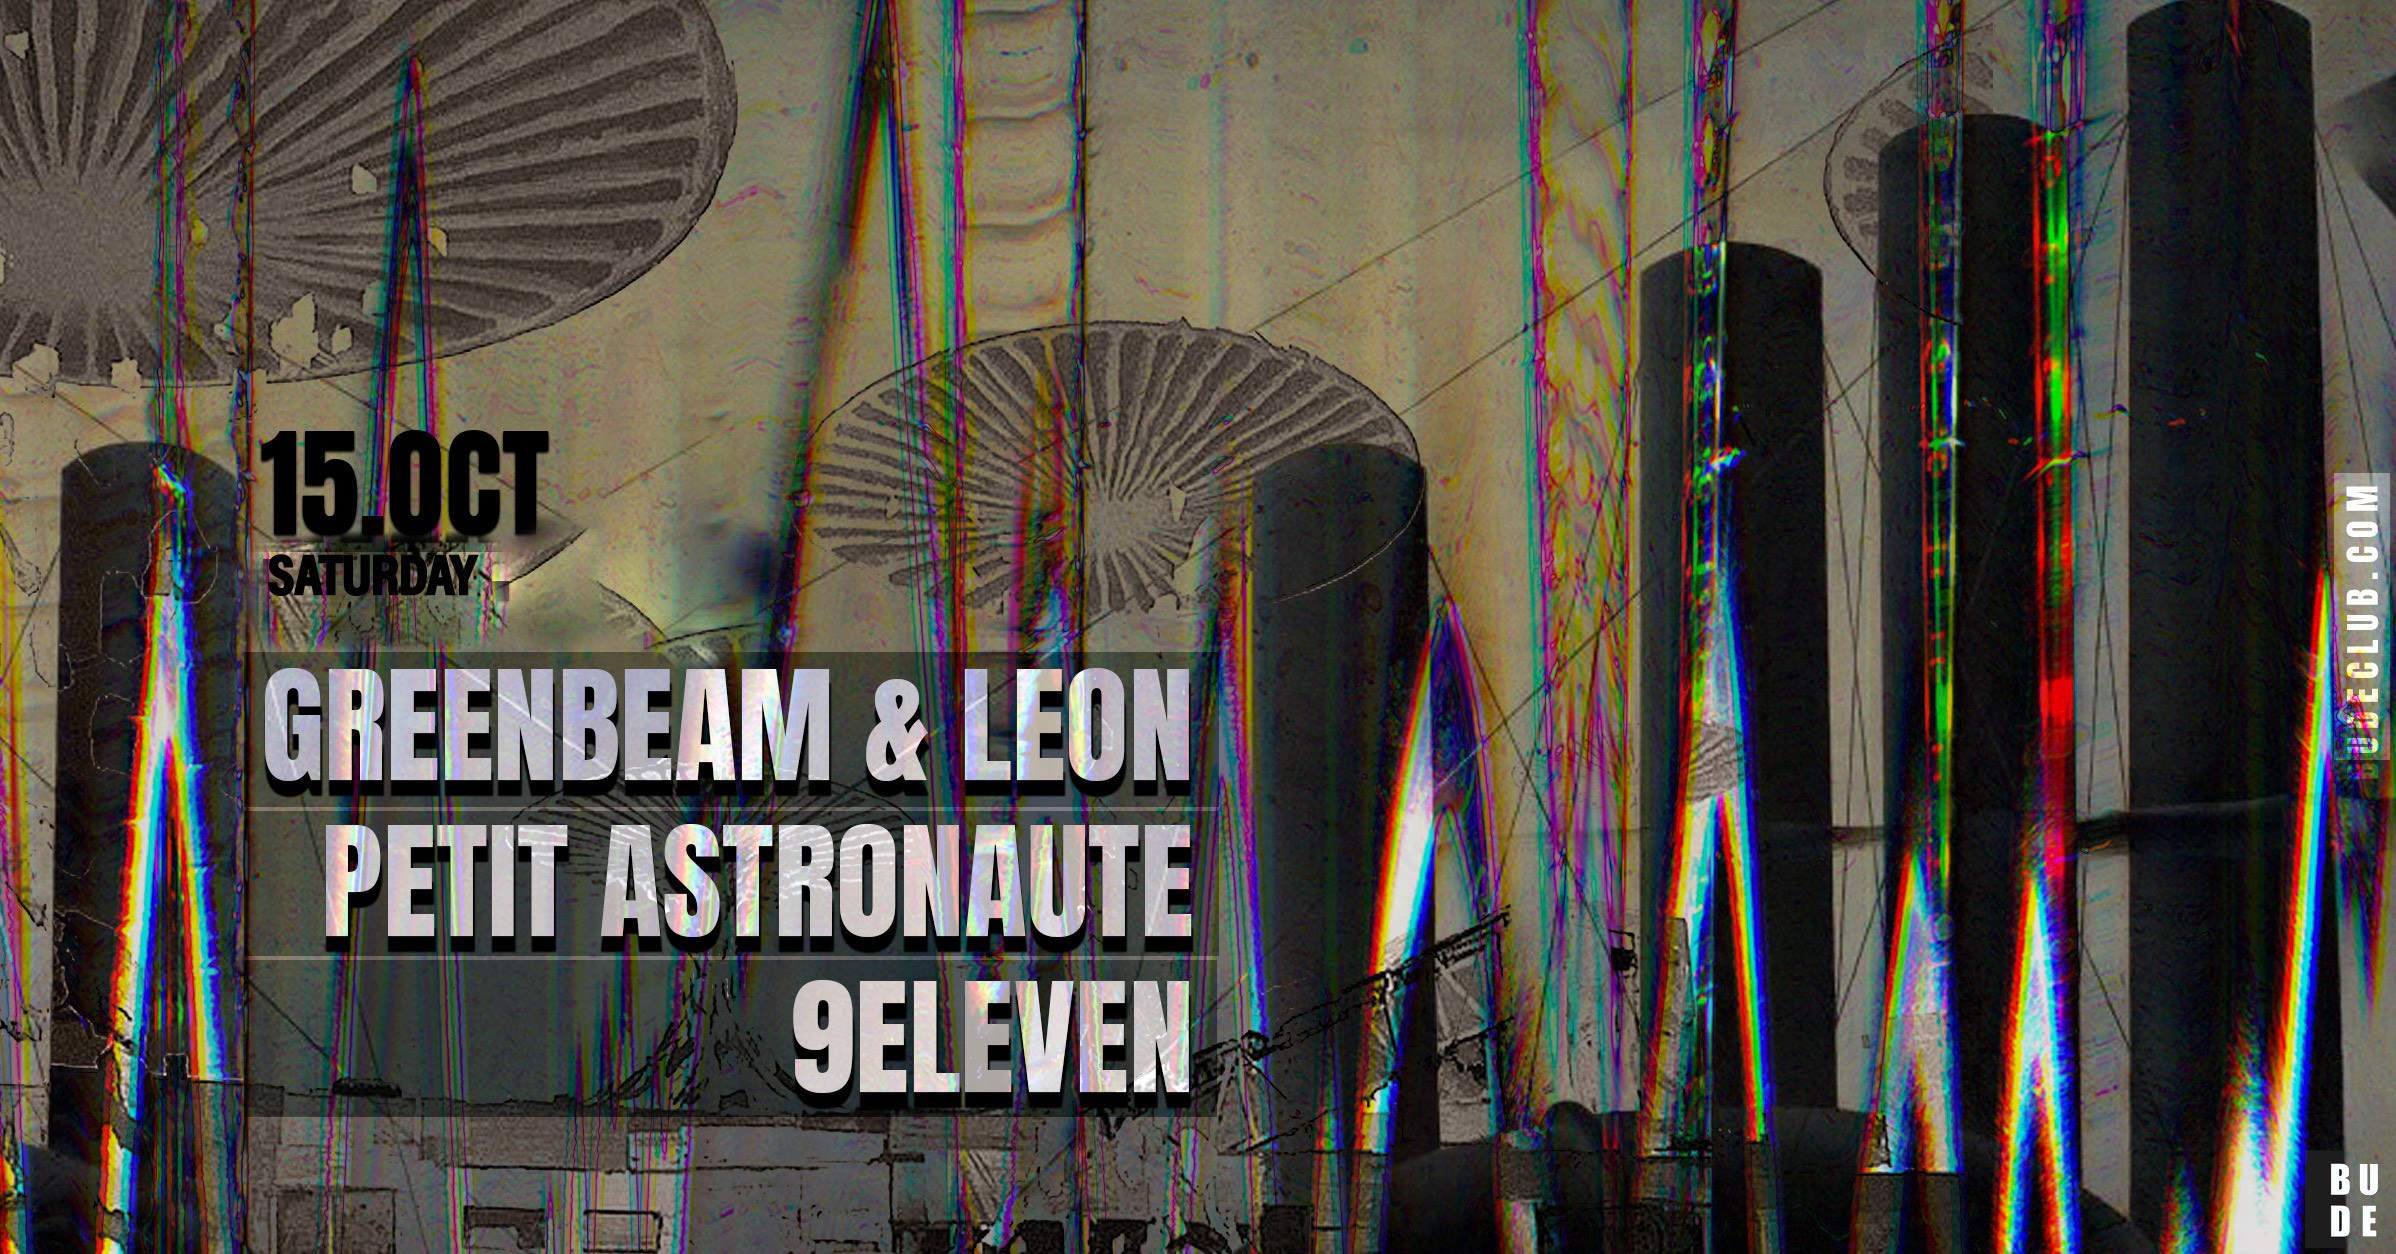 Bude || Greenbeam & Leon || Petit Astronaute || 9ELEVEN - フライヤー表